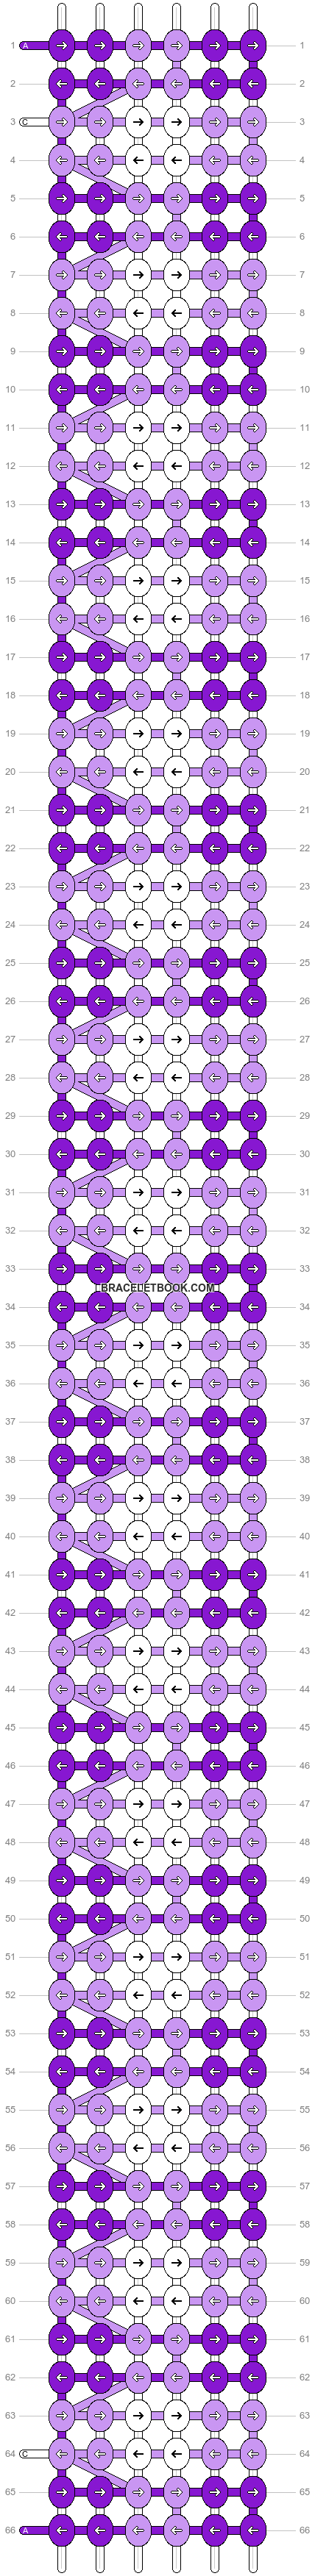 Alpha pattern #80755 variation #146762 pattern